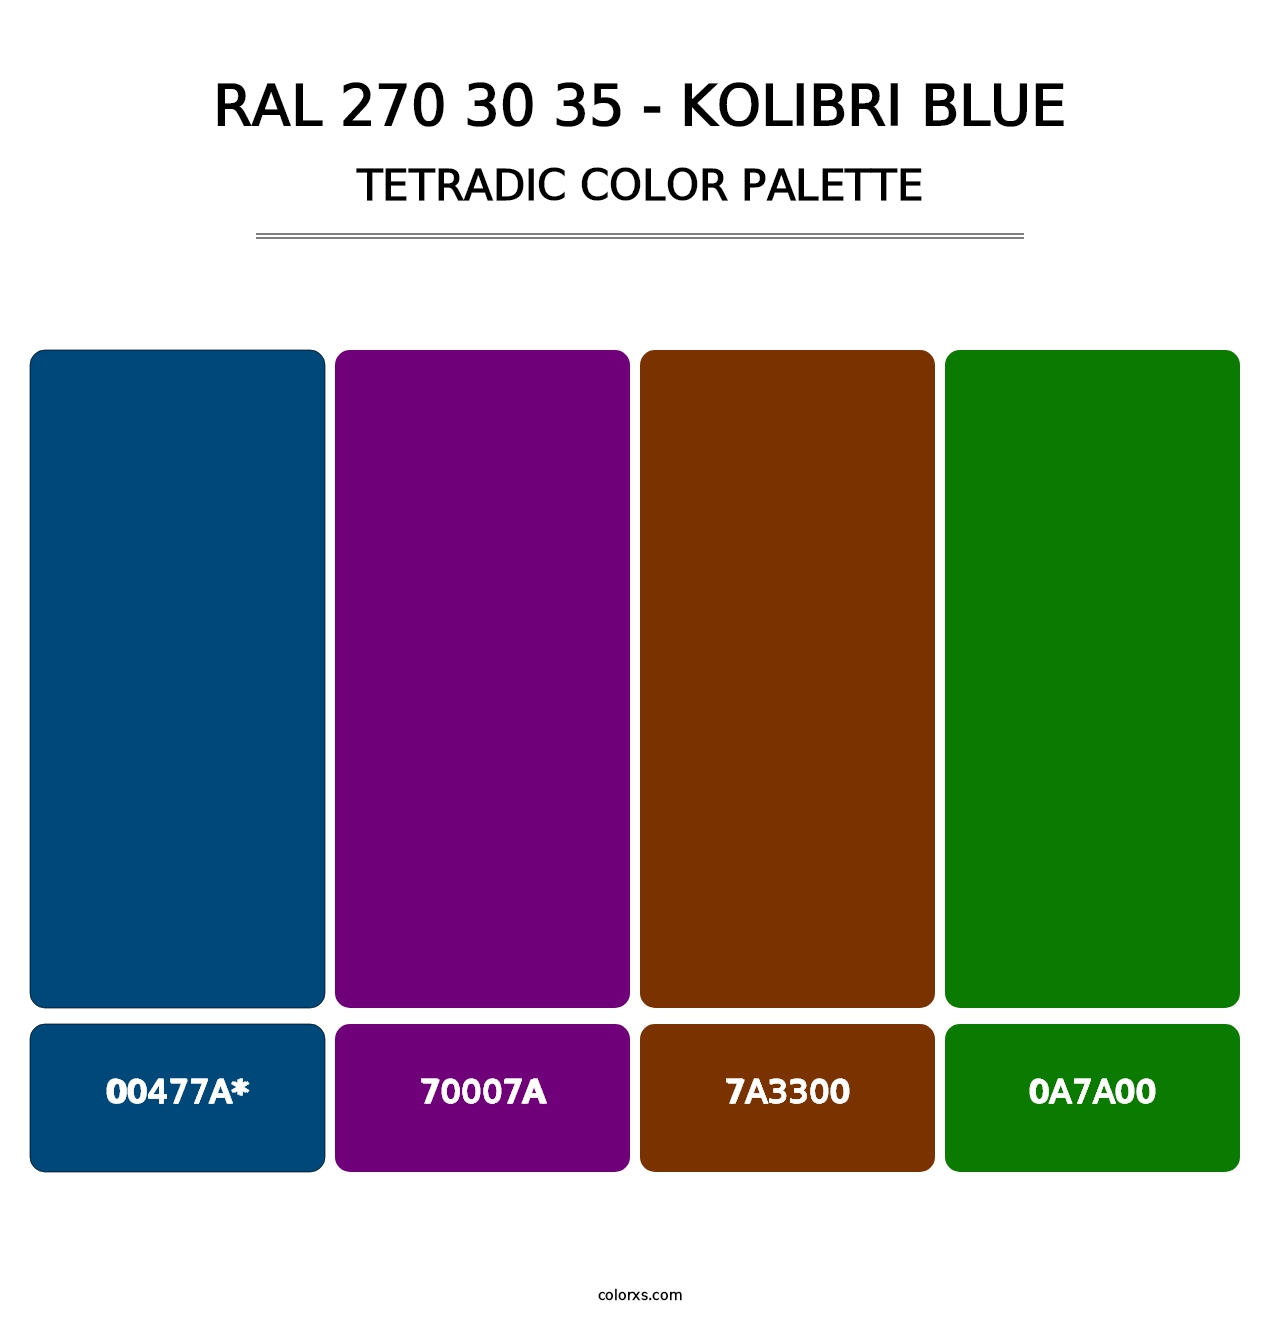 RAL 270 30 35 - Kolibri Blue - Tetradic Color Palette